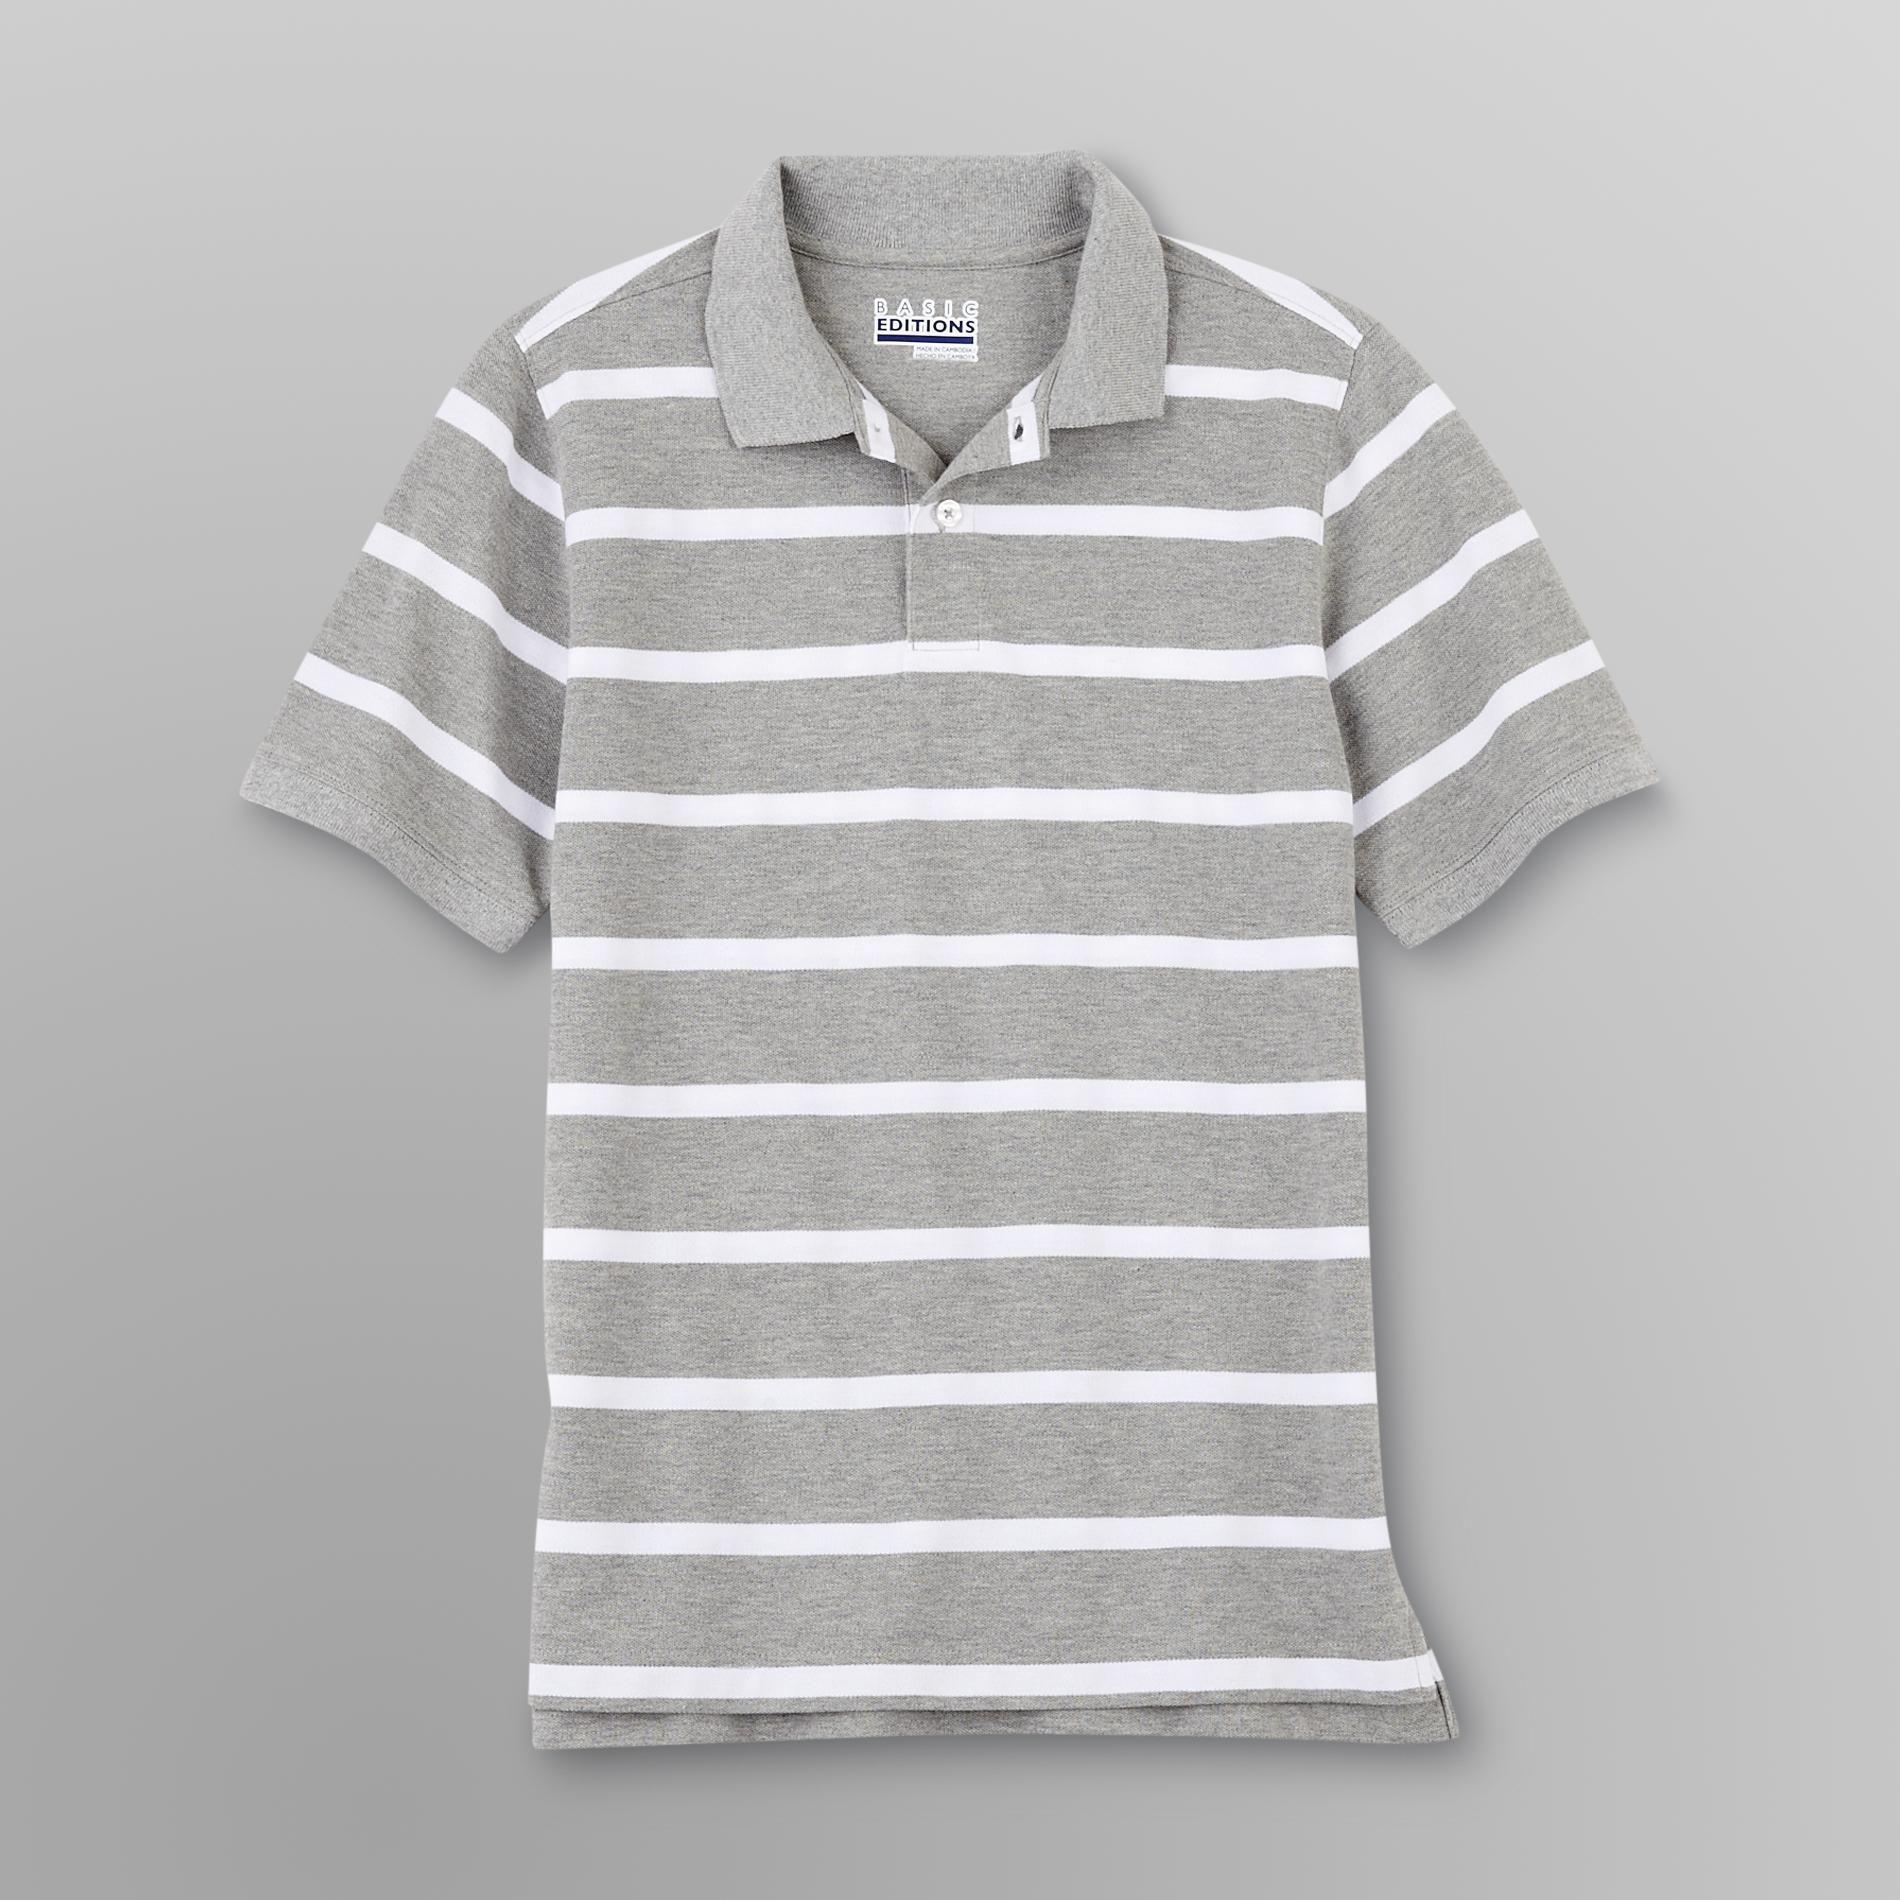 Basic Editions Boy's Polo Shirt - Stripes